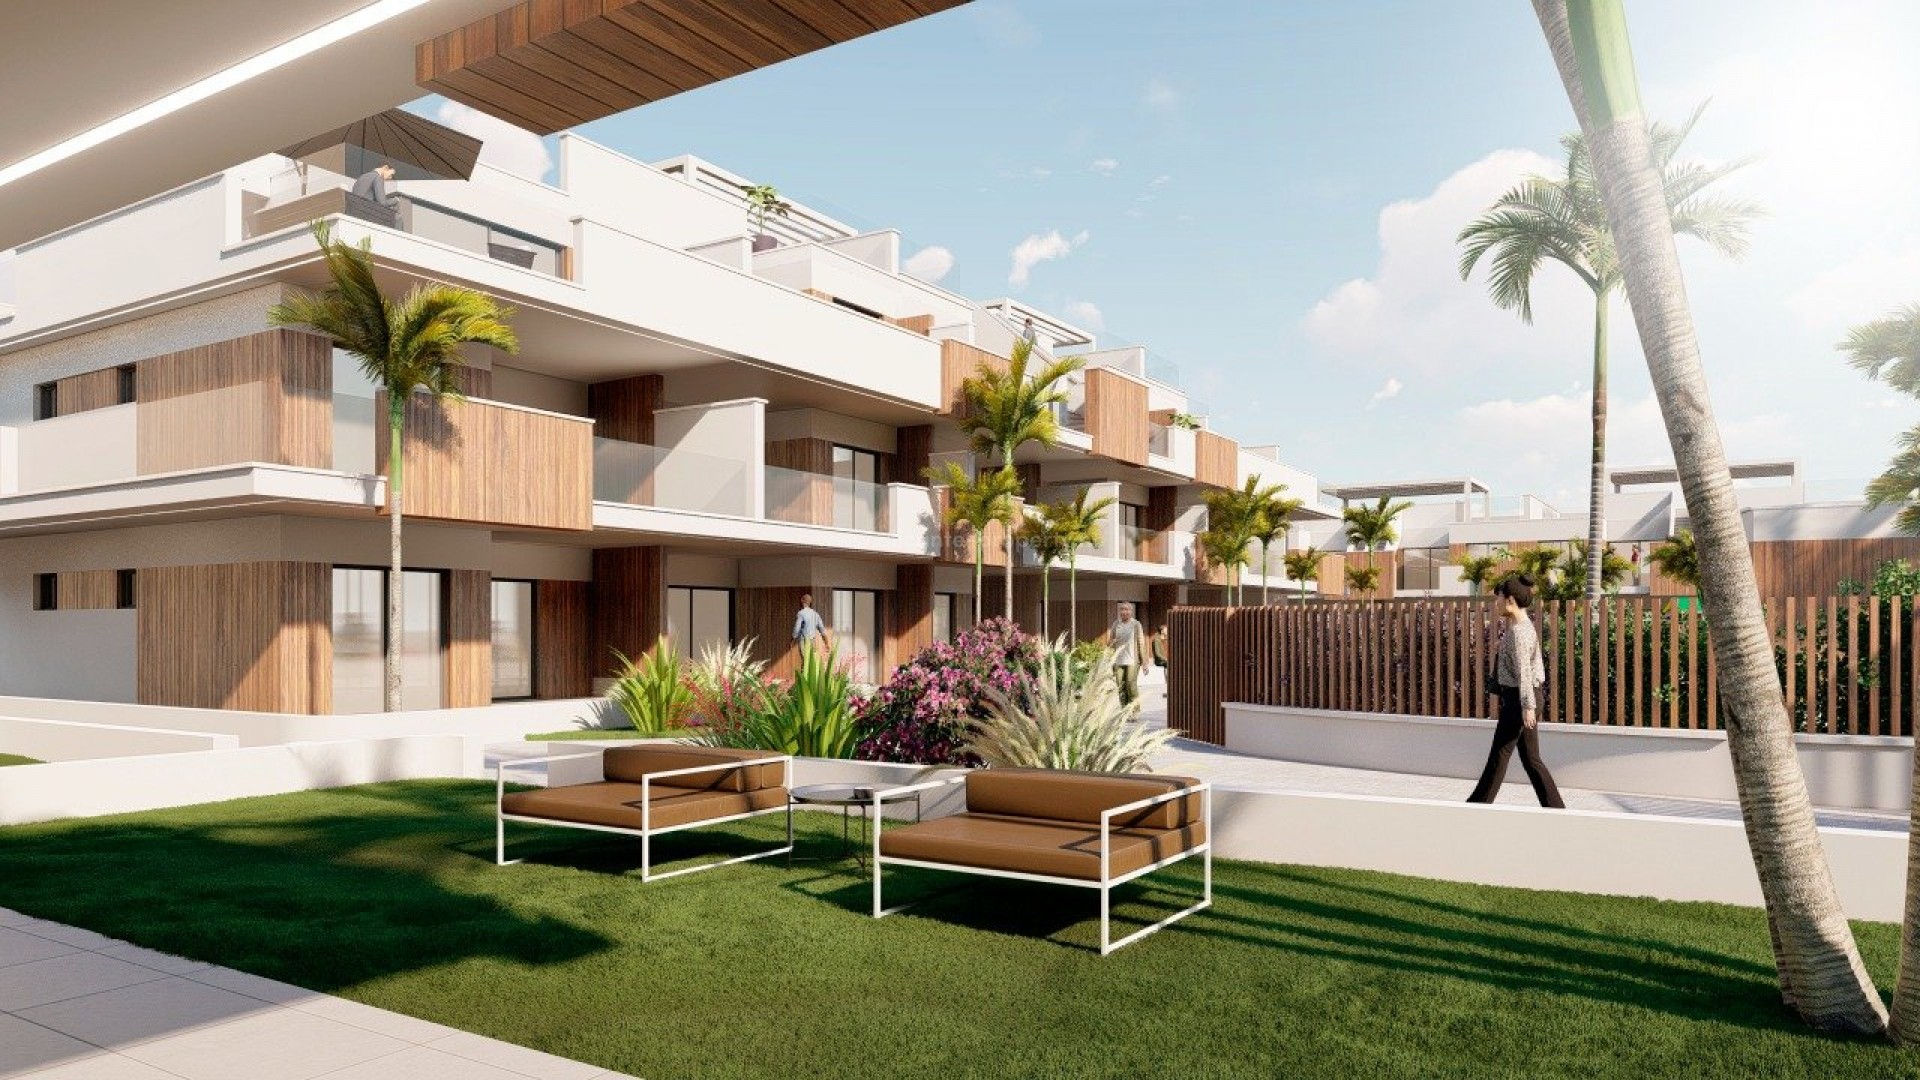 Bungalow, apartments/penthouses in Pilar de La Horadada, 2/3 bedrooms, terraces, penthouses w/solarium, shared garden with pool and gym